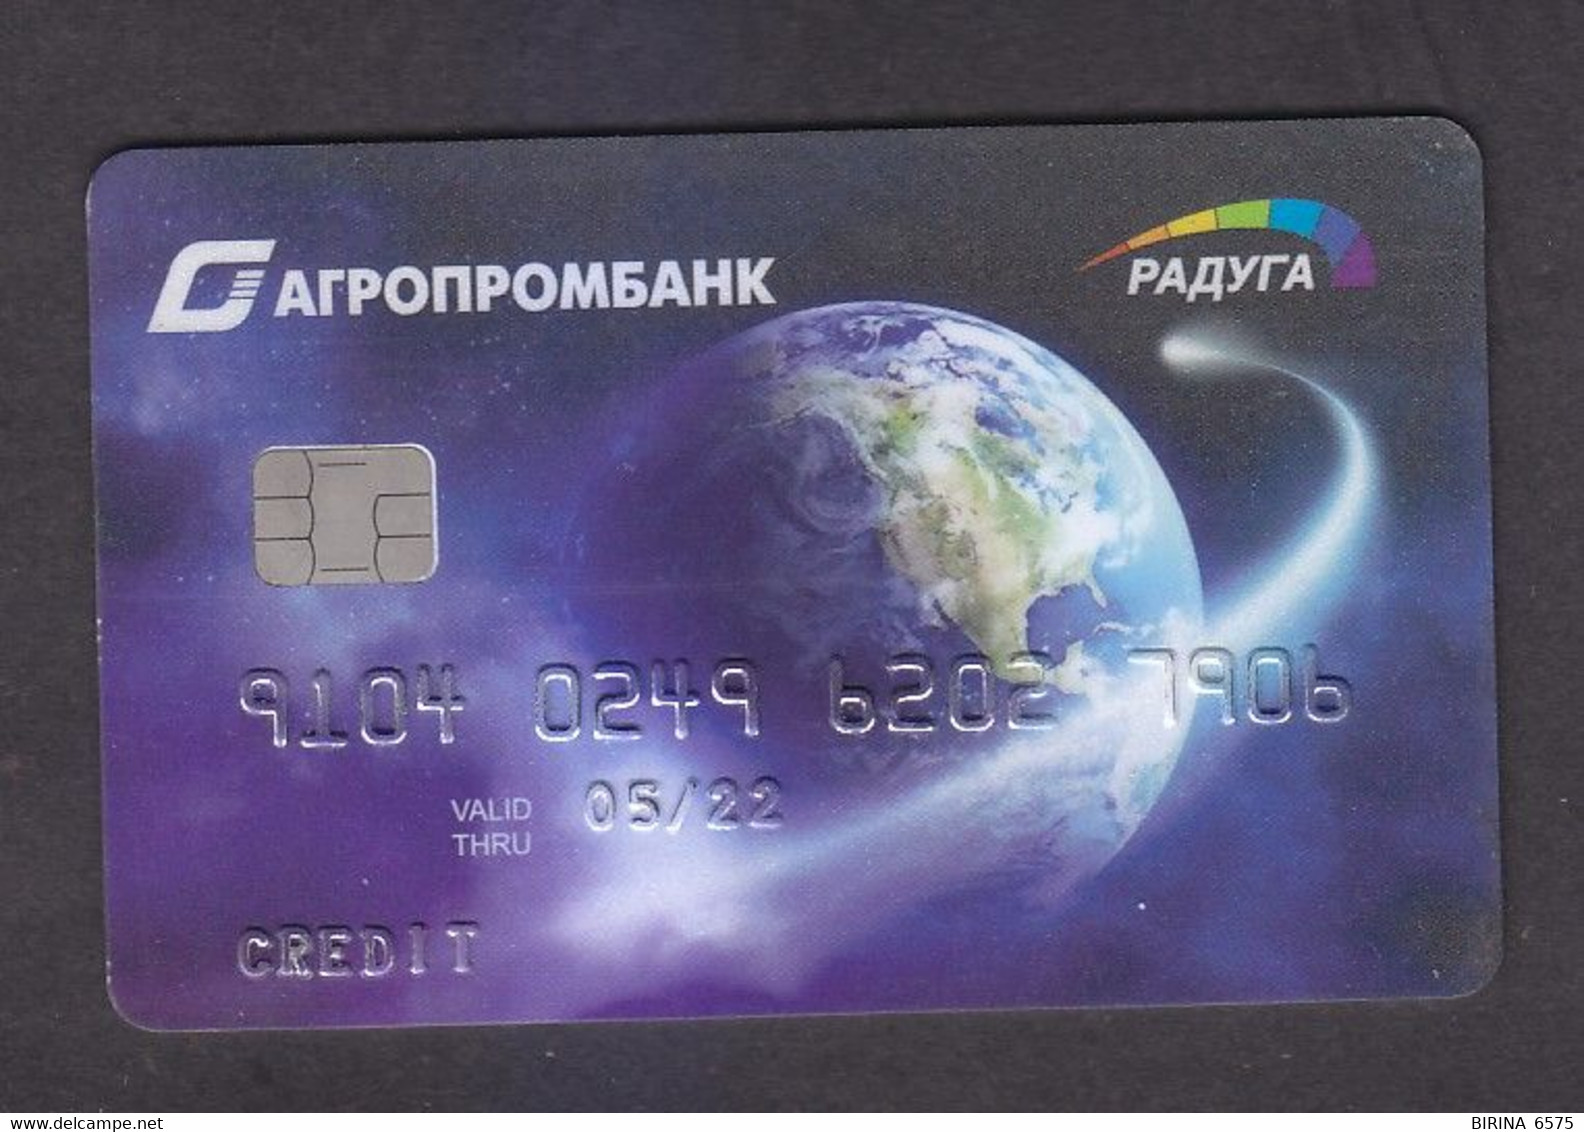 BANK CARD. AGROPROMBANK. MOLDOVA. TRANSNISTRIA.  - 1-5 - Moldova